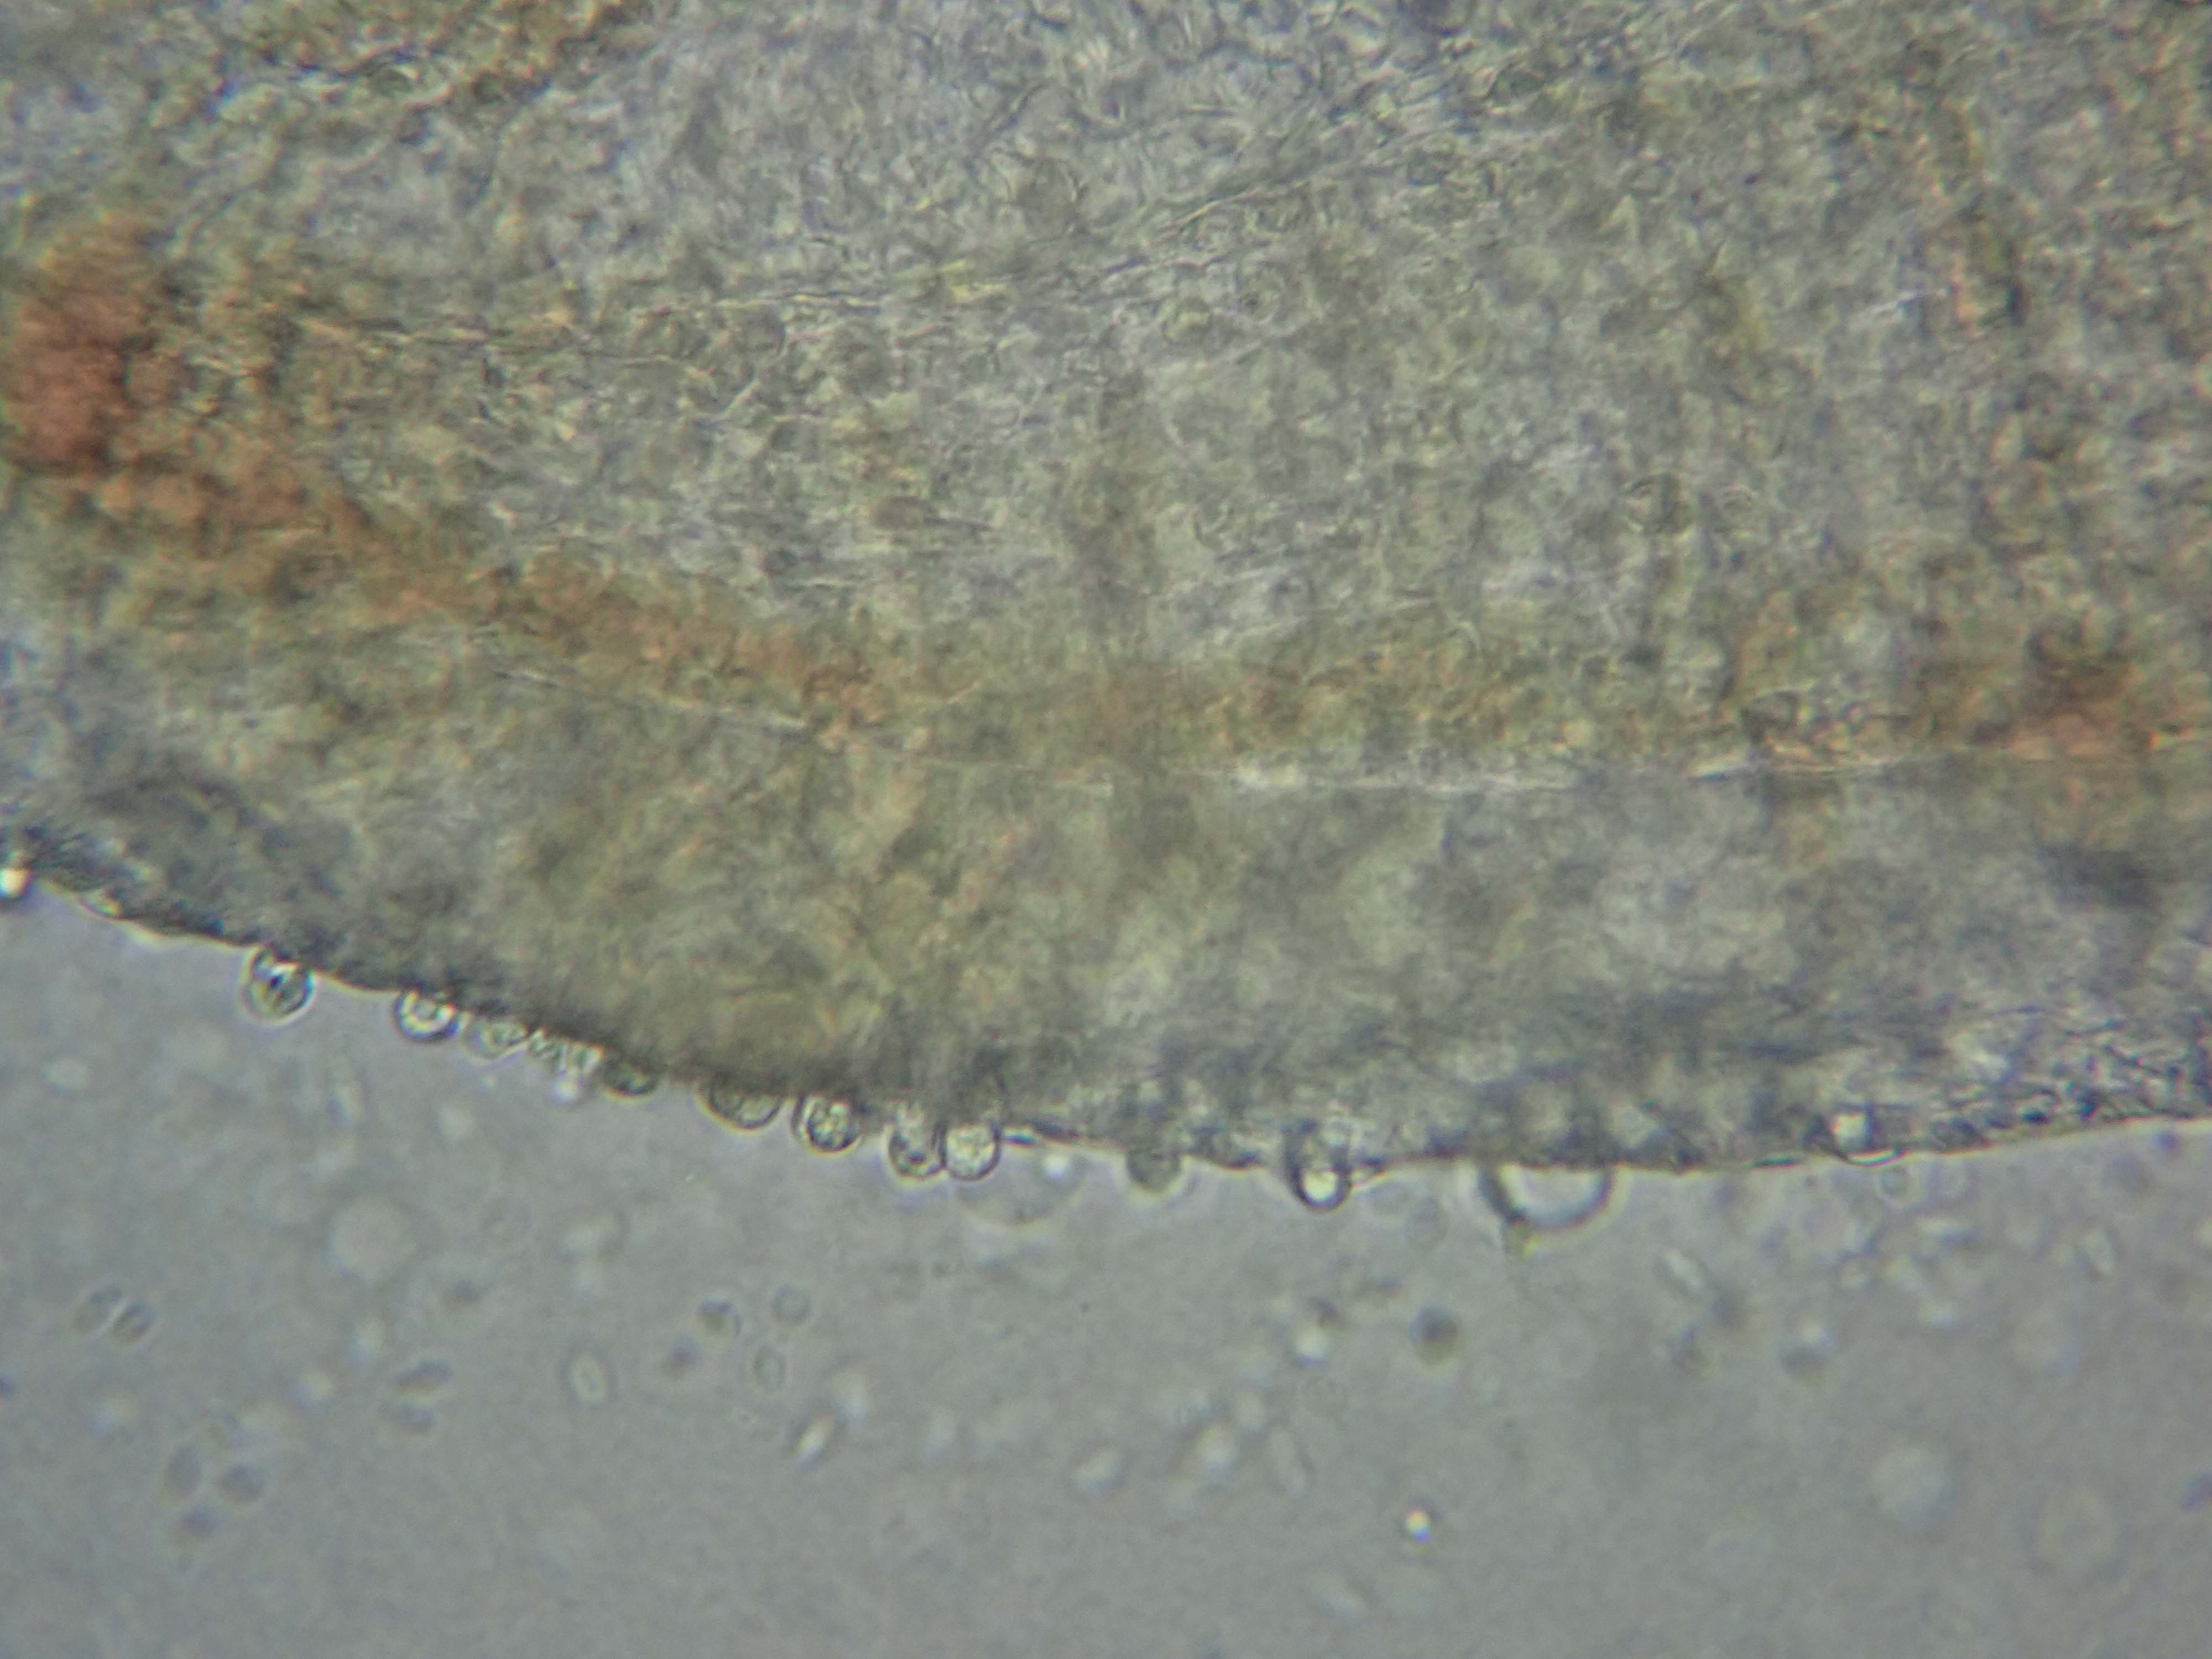 Amoeben auf den Kiemenoberfläche an Mikroskop